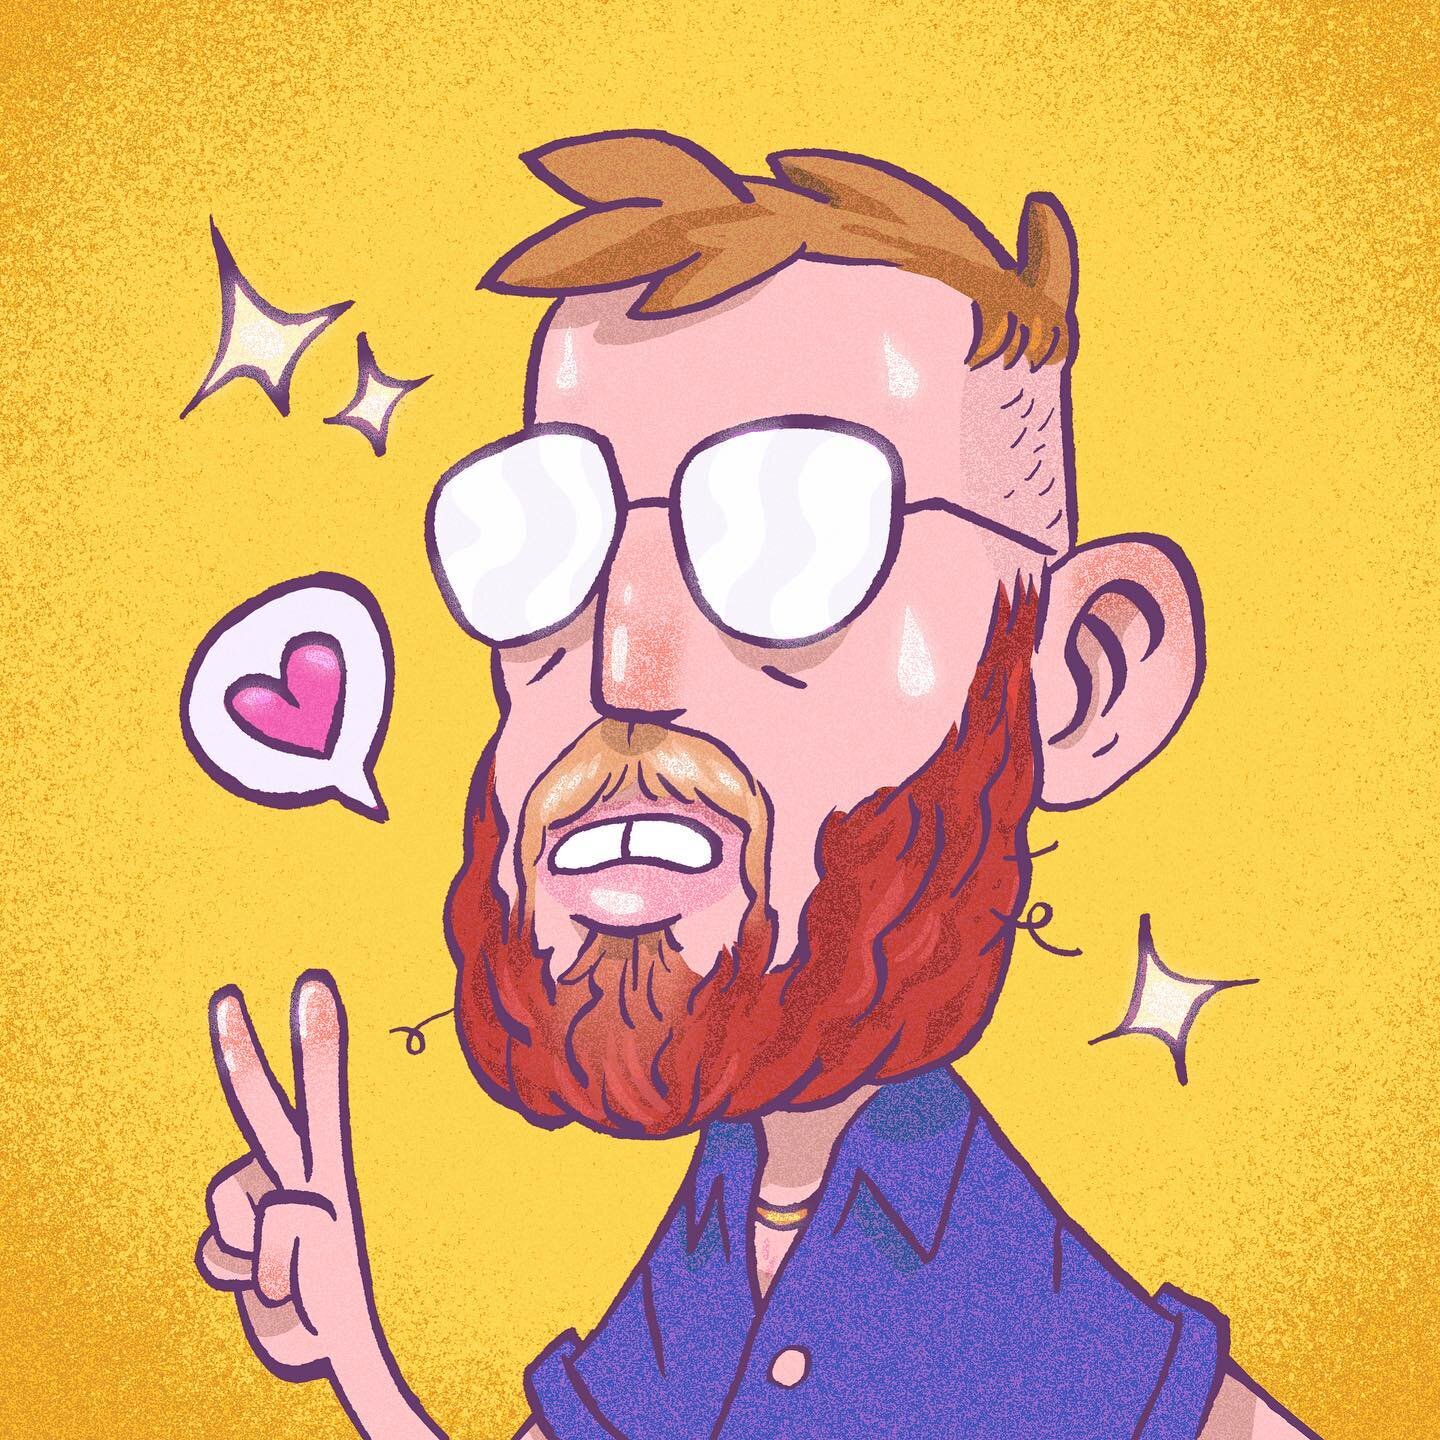 LOVE YOU ALL! Also I have a beard now
.
.
.
.
.
.
.
.
.
#illustration #illustrationartists #illustrator #itme #selfie #beard #beardboy #boybeard #adminreveal #drawing #doodle